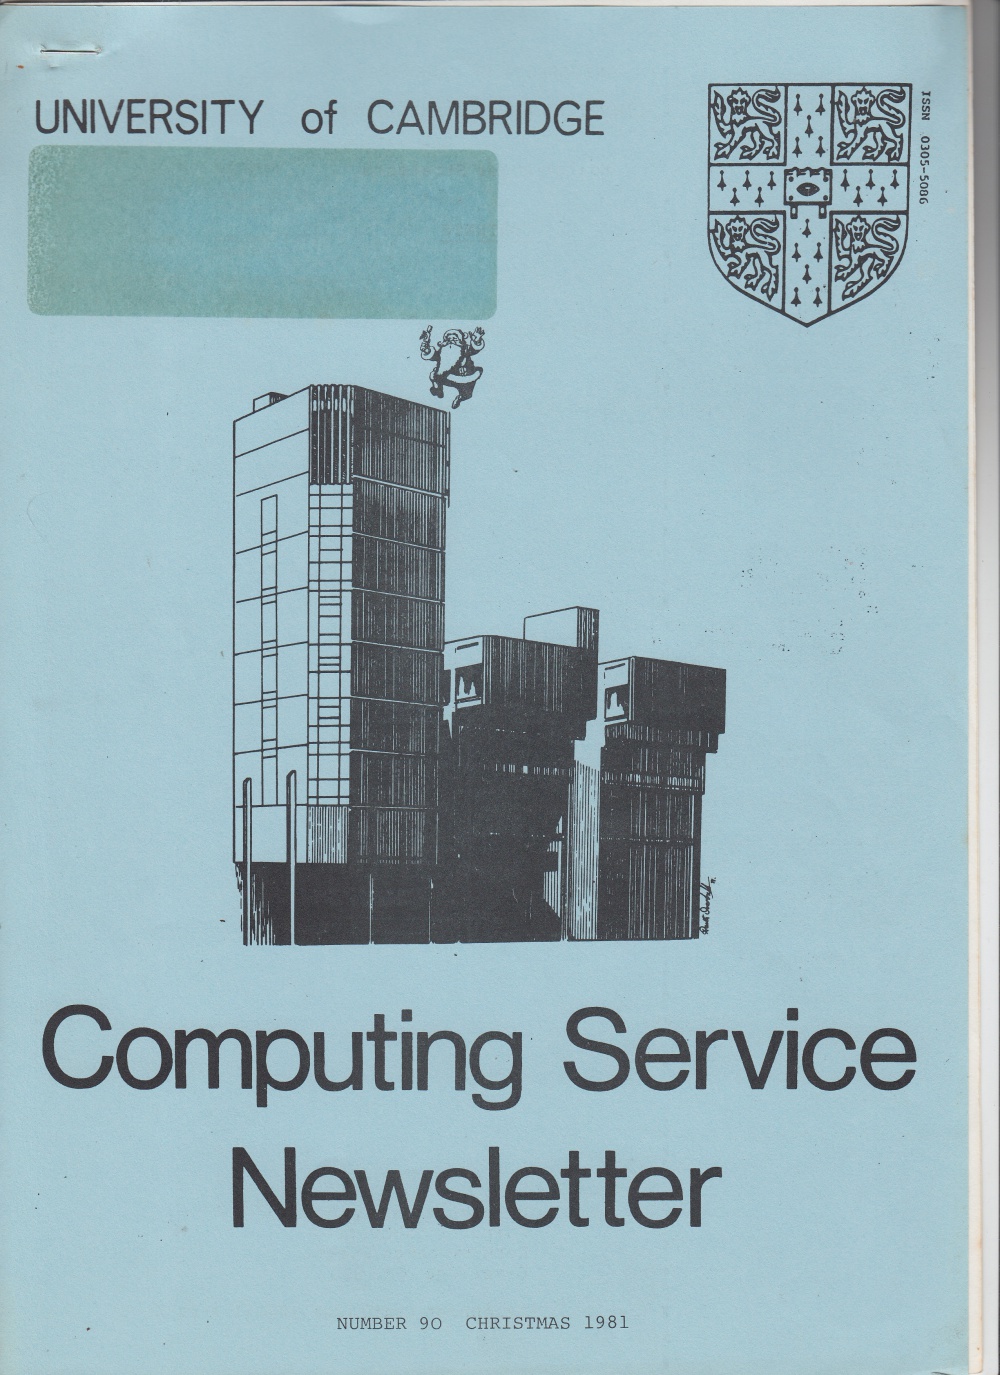 Article: University of Cambridge Computing Service Christmas 1981 Newsletter 90